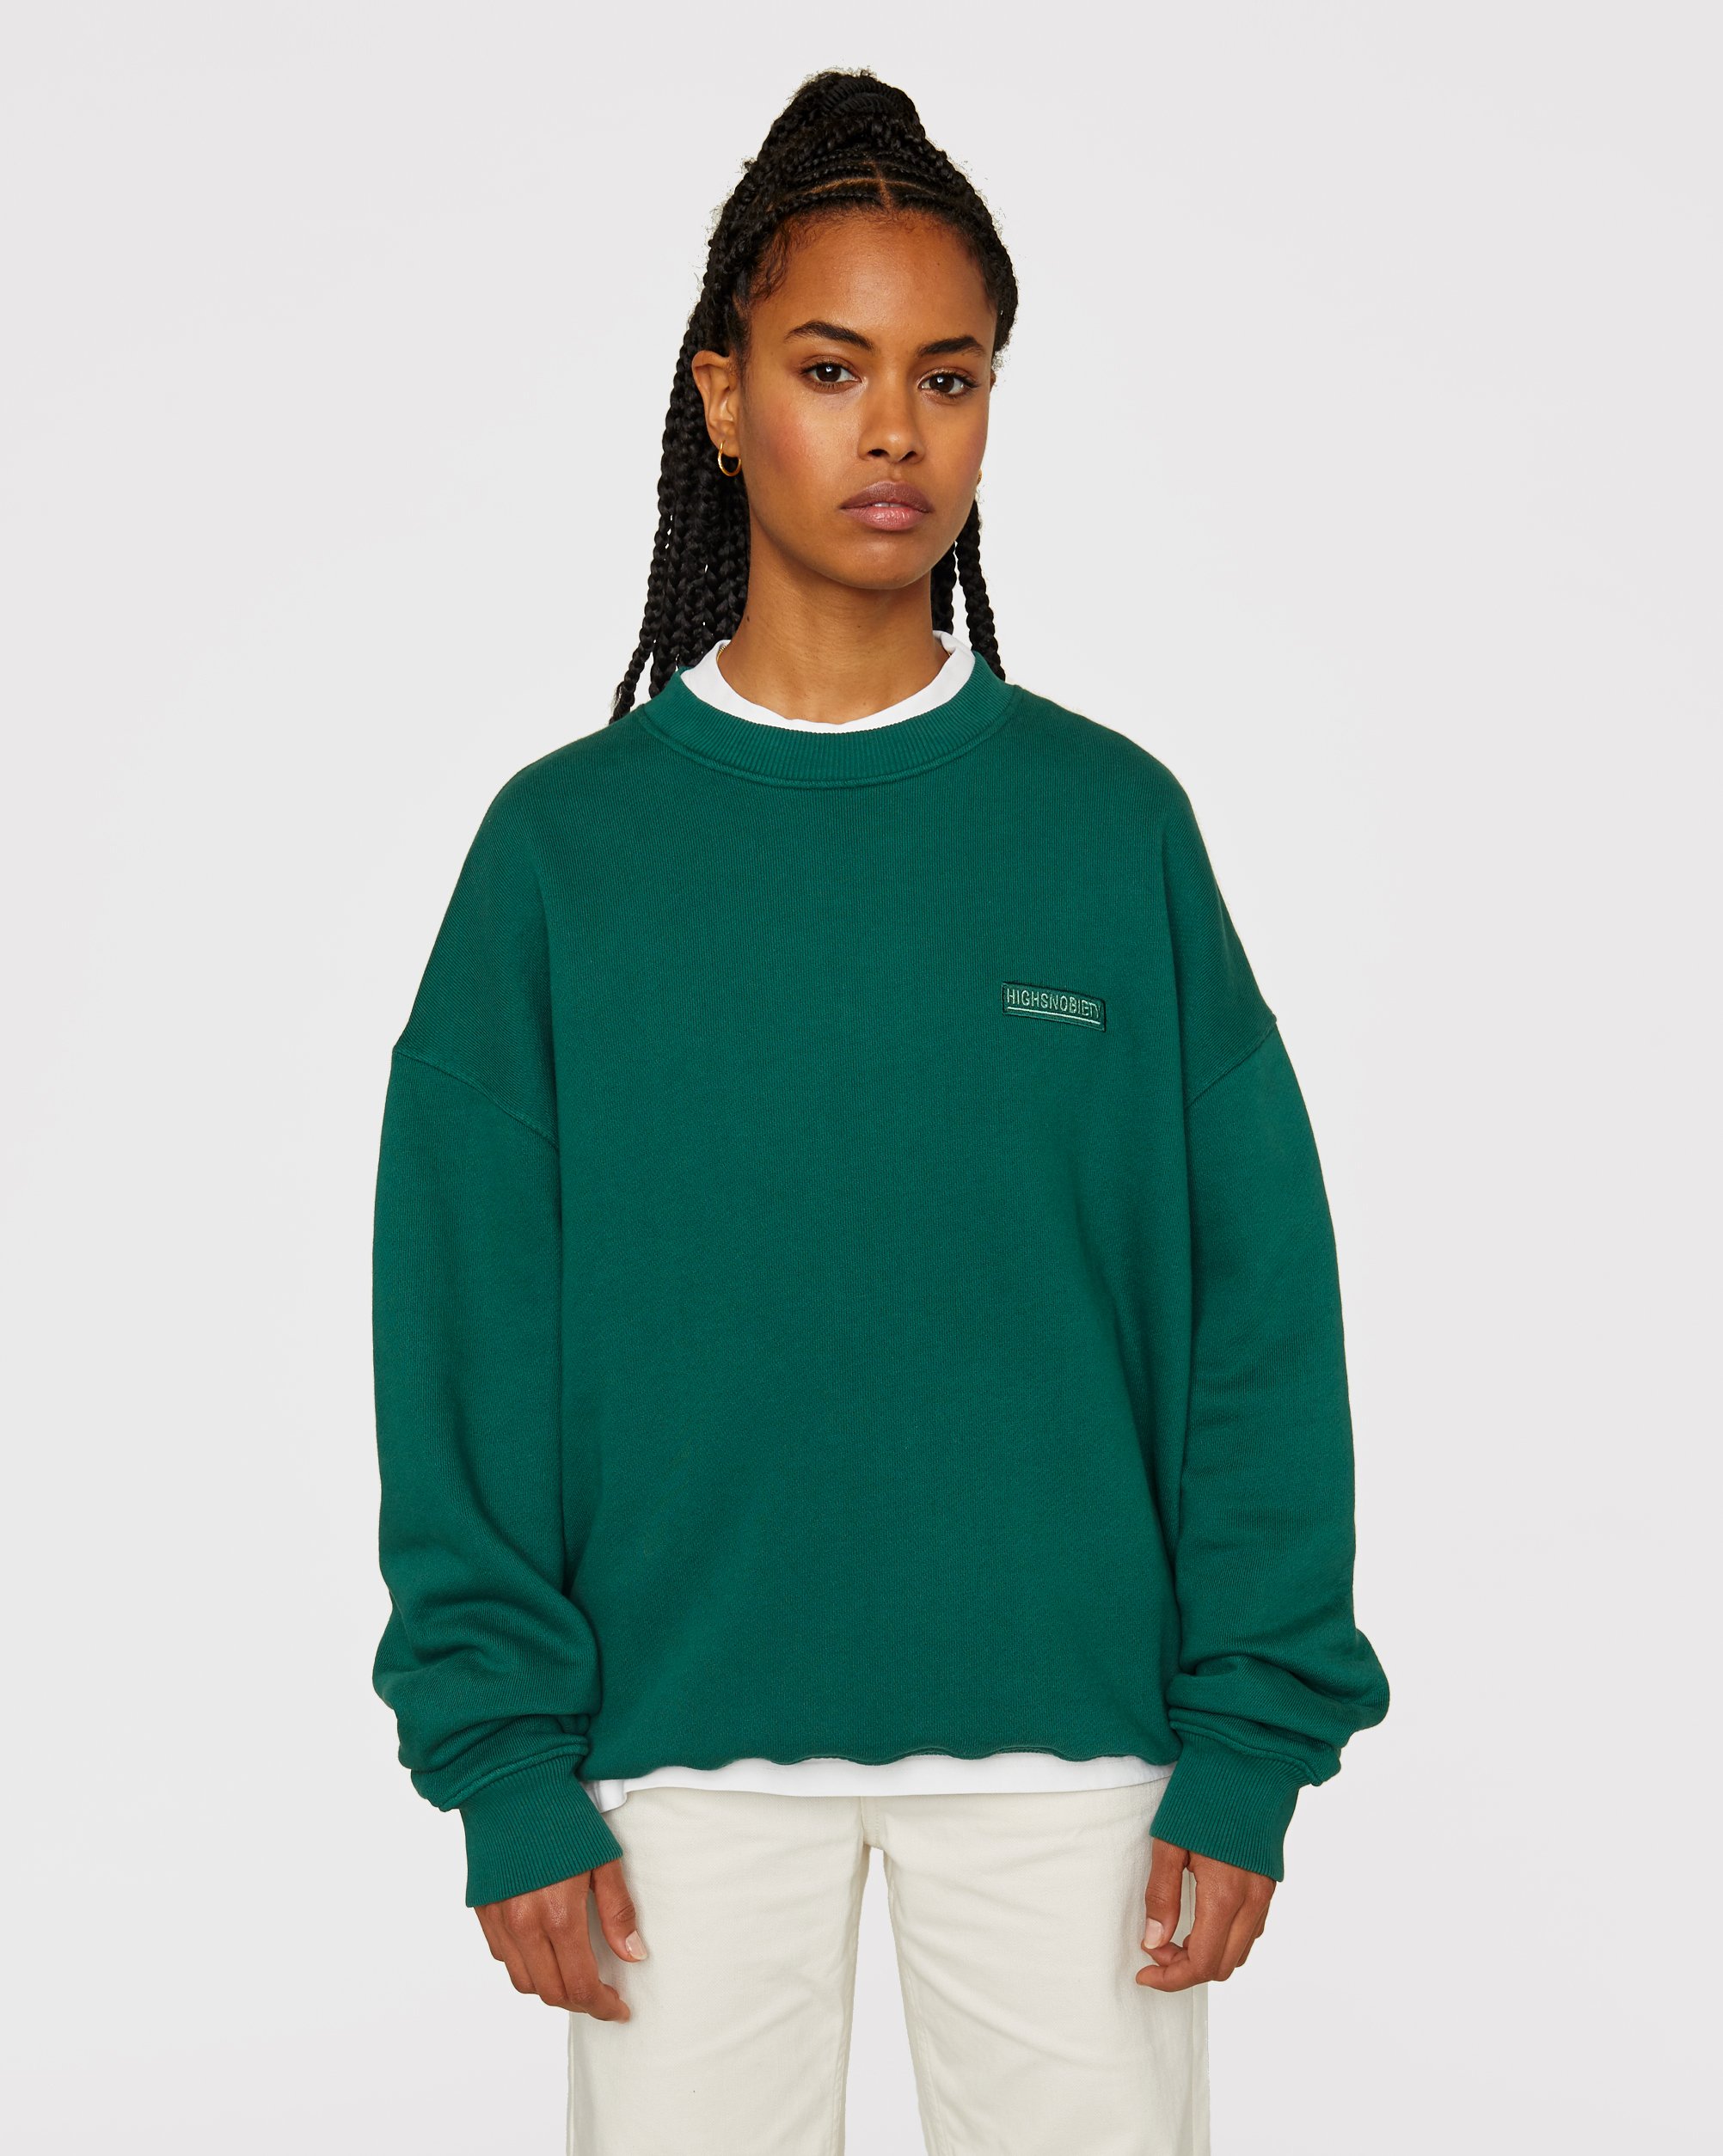 Highsnobiety – Staples Sweatshirt Green | Highsnobiety Shop